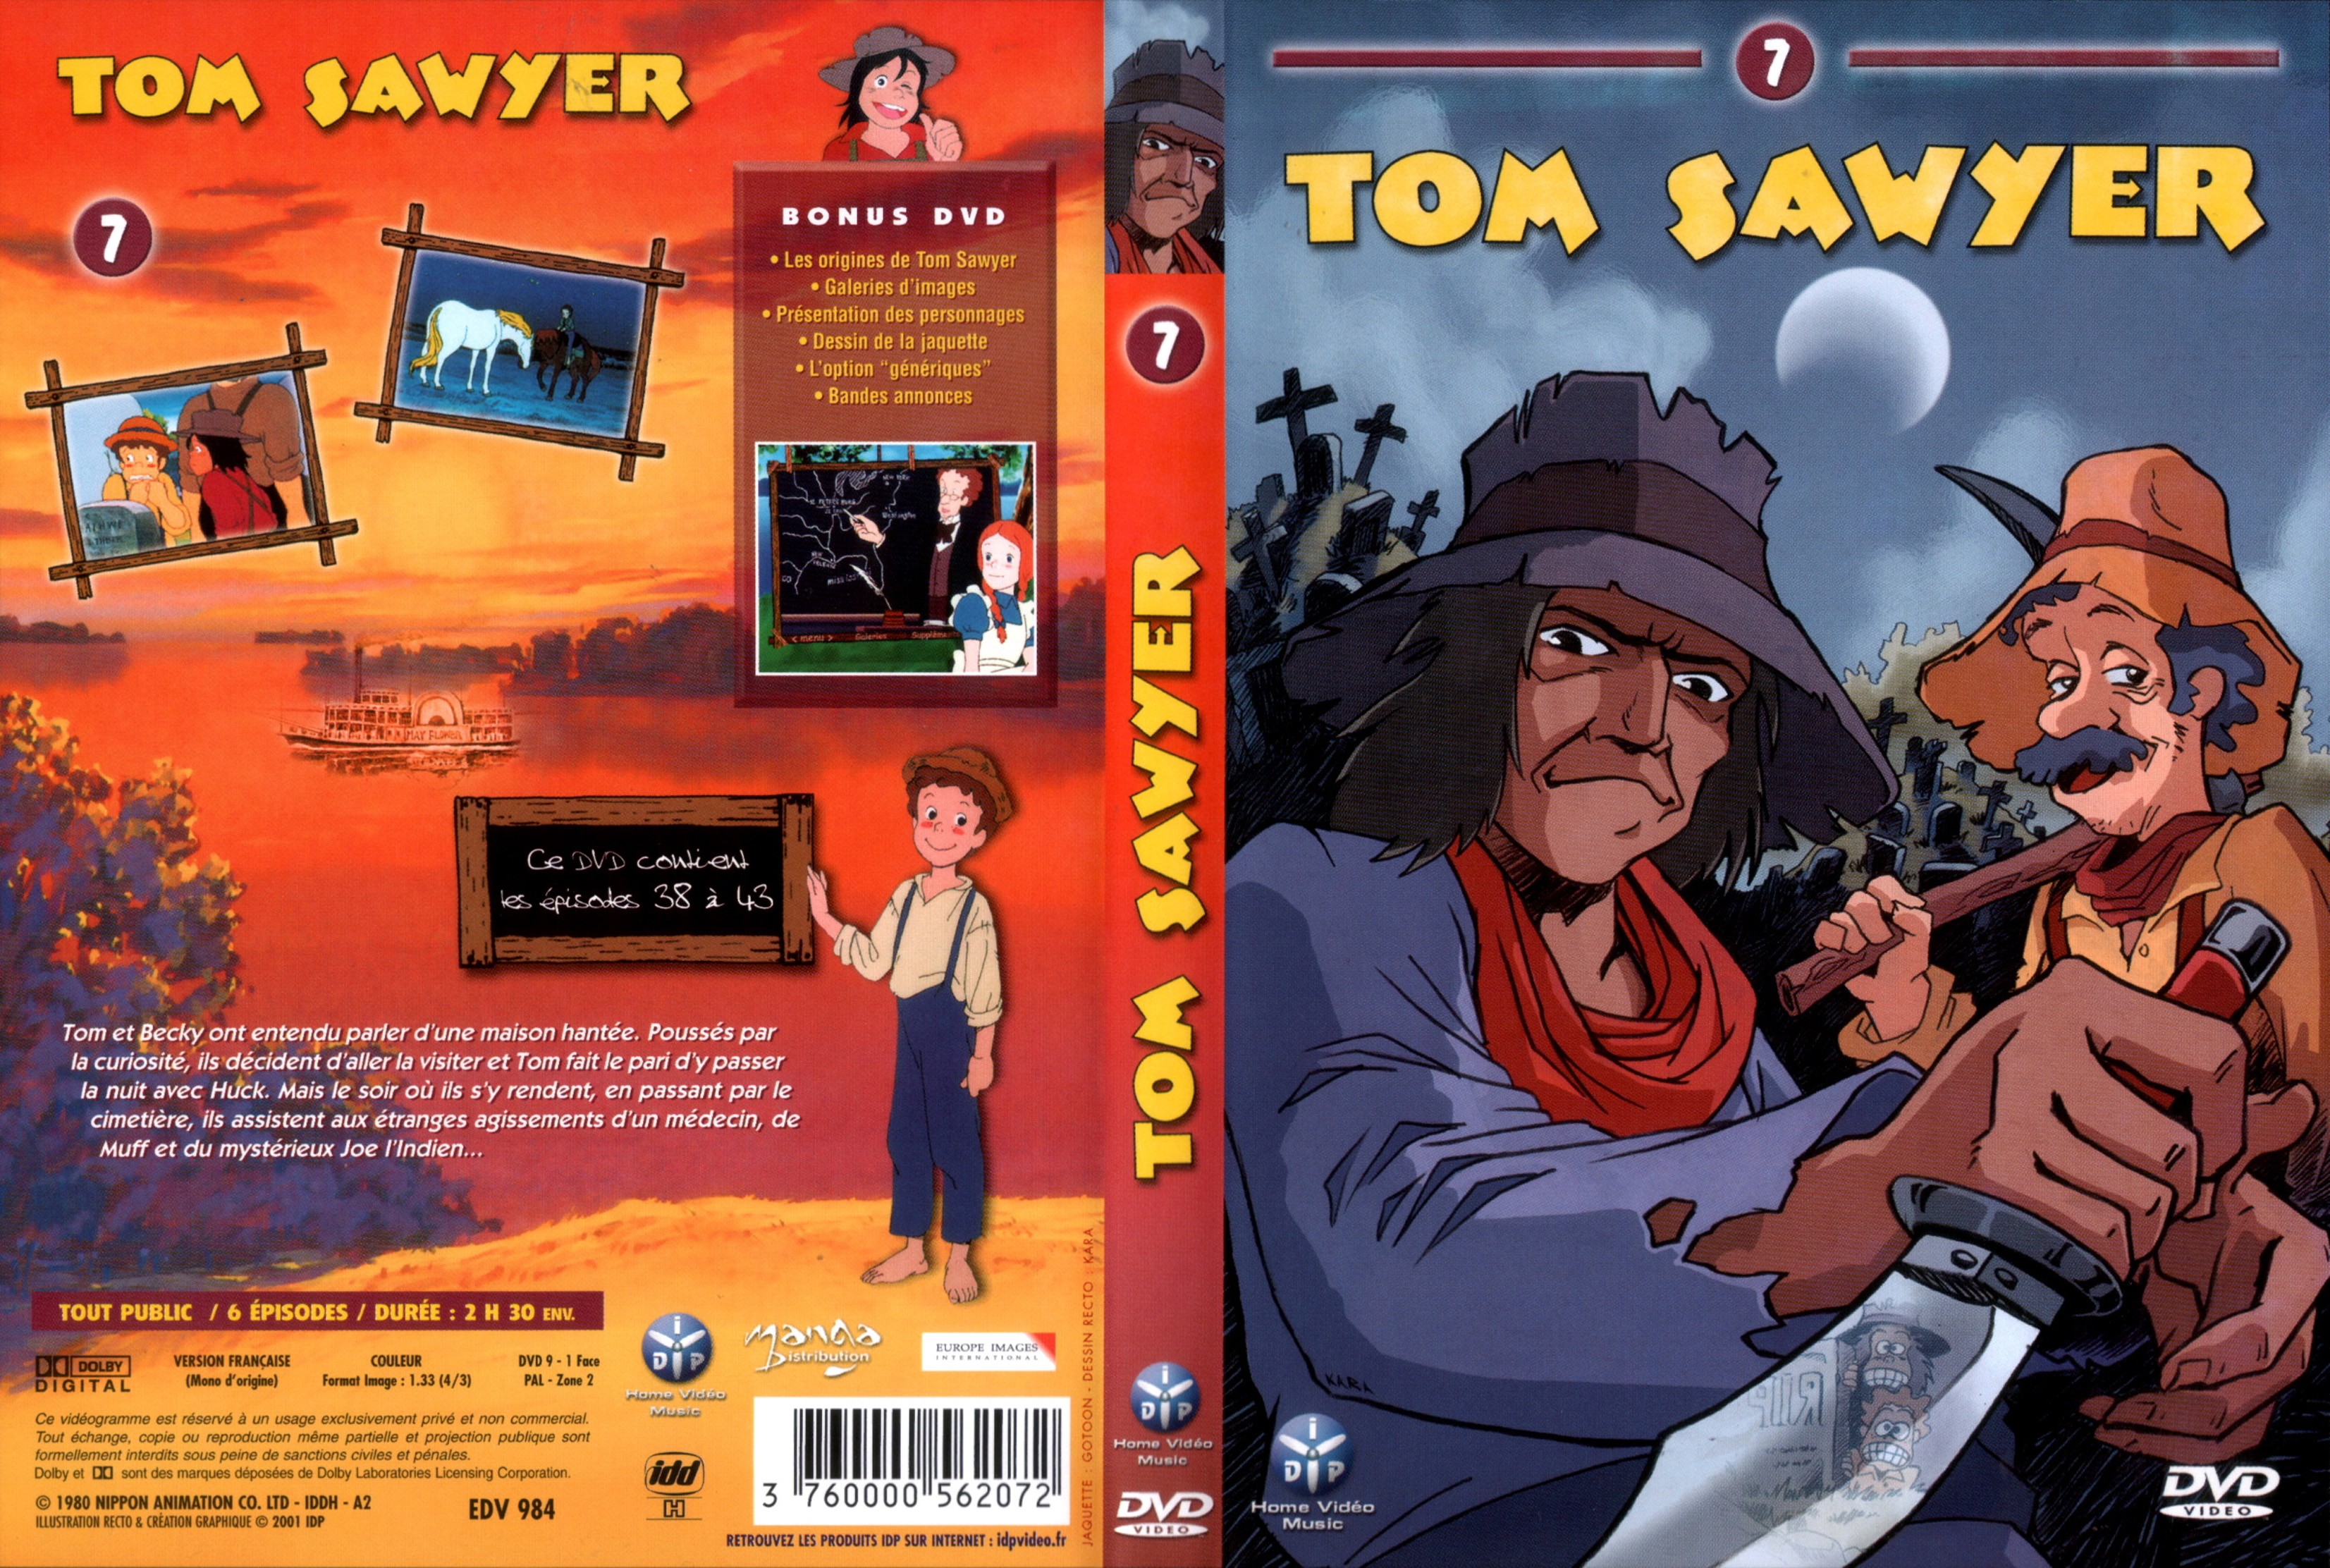 Jaquette DVD Tom Sawyer vol 7